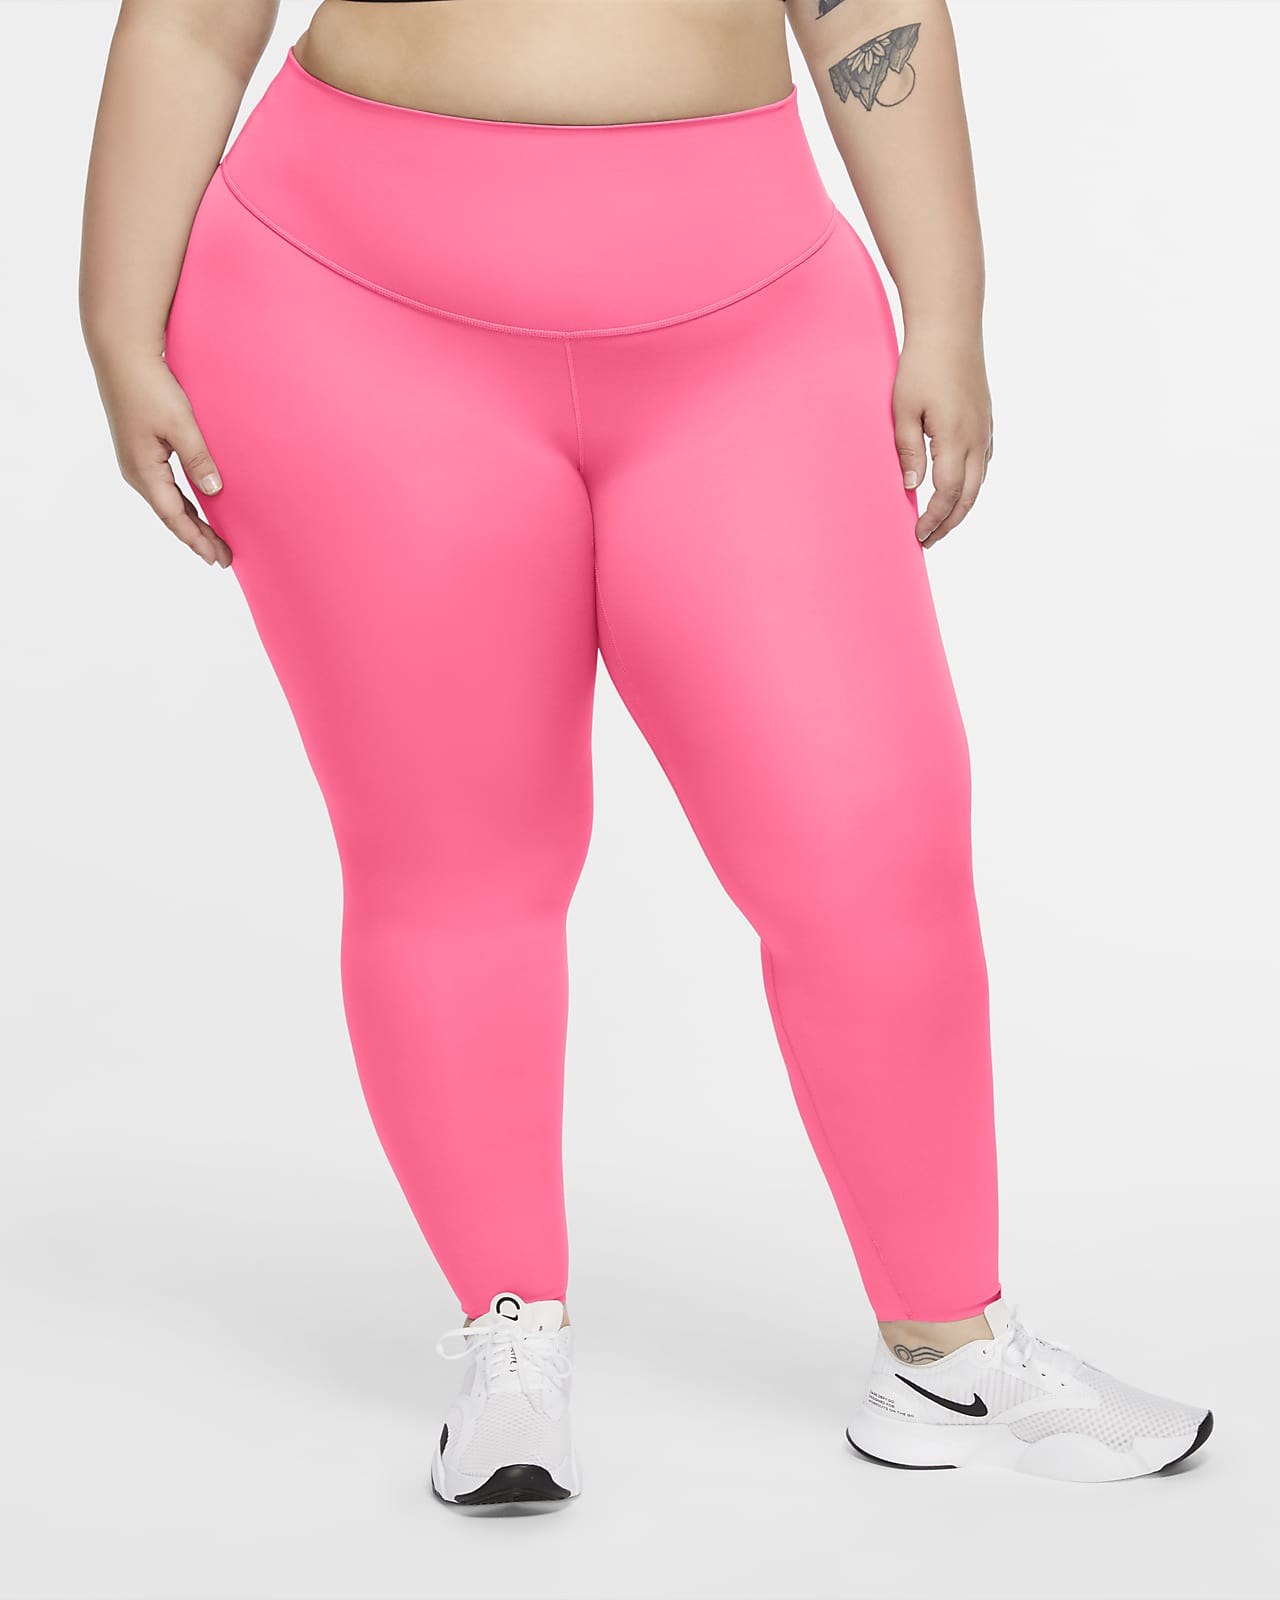 hot pink leggings plus size